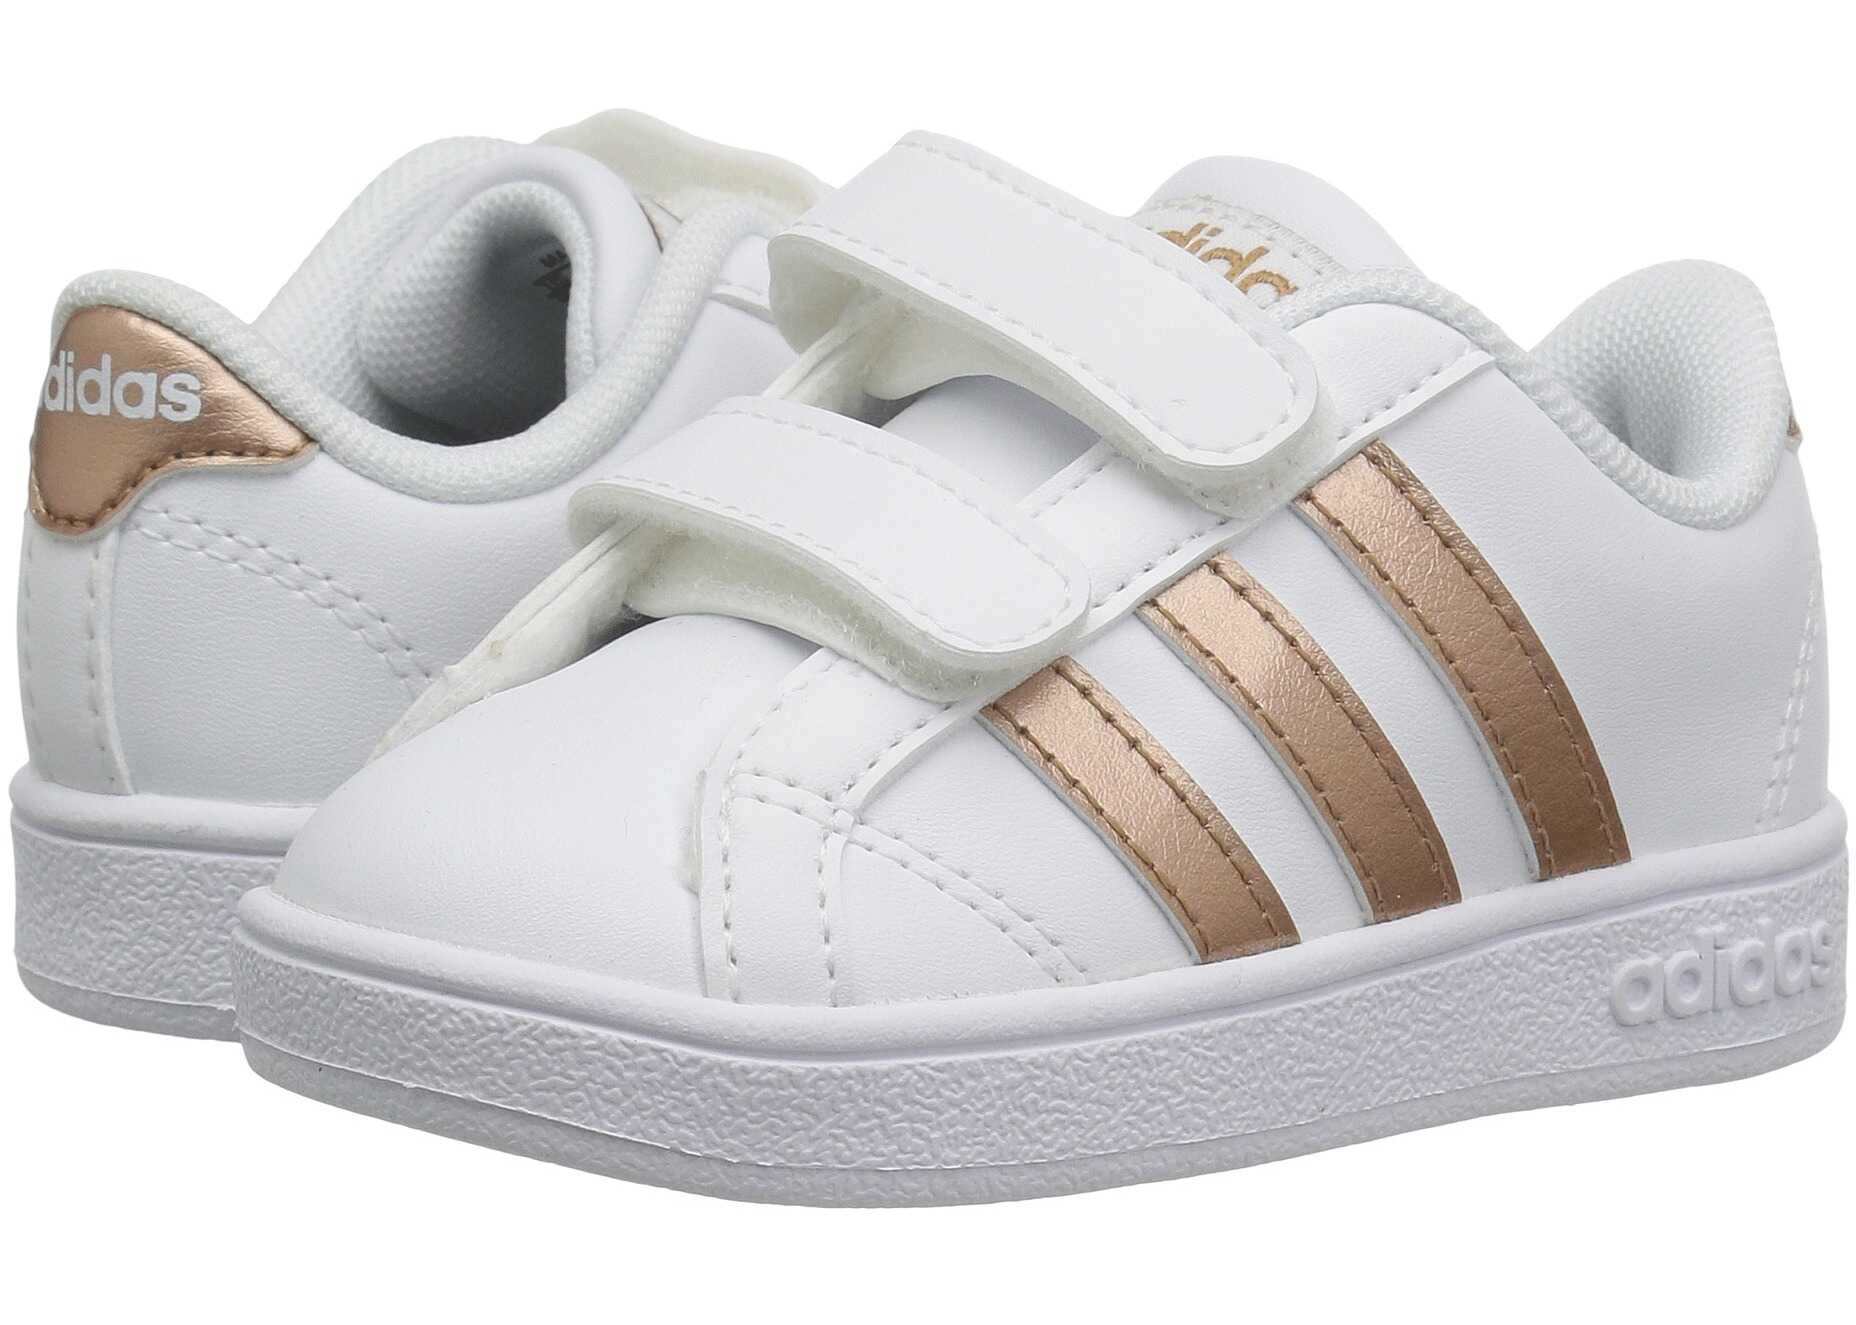 adidas Kids Baseline CMF (Infant/Toddler) Footwear White/Copper Metallic/Core Black